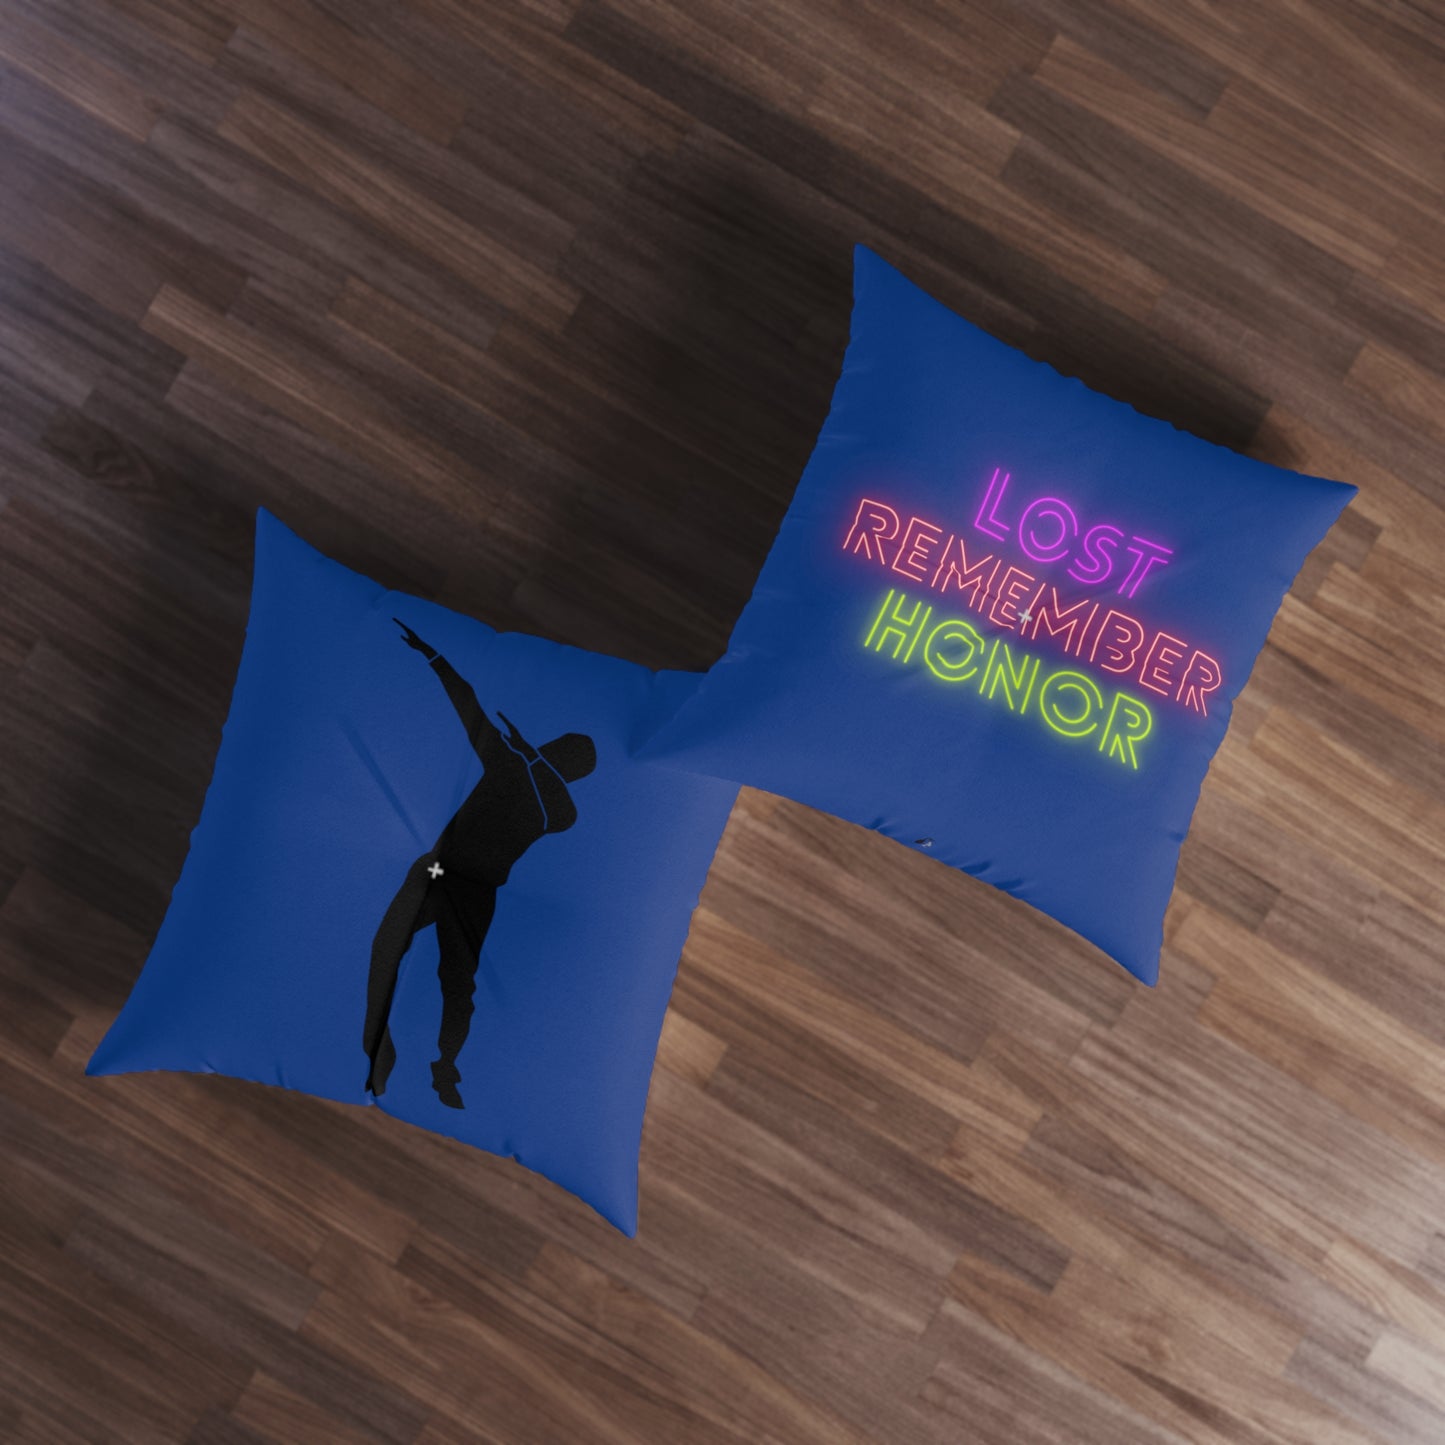 Tufted Floor Pillow, Square: Dance Dark Blue